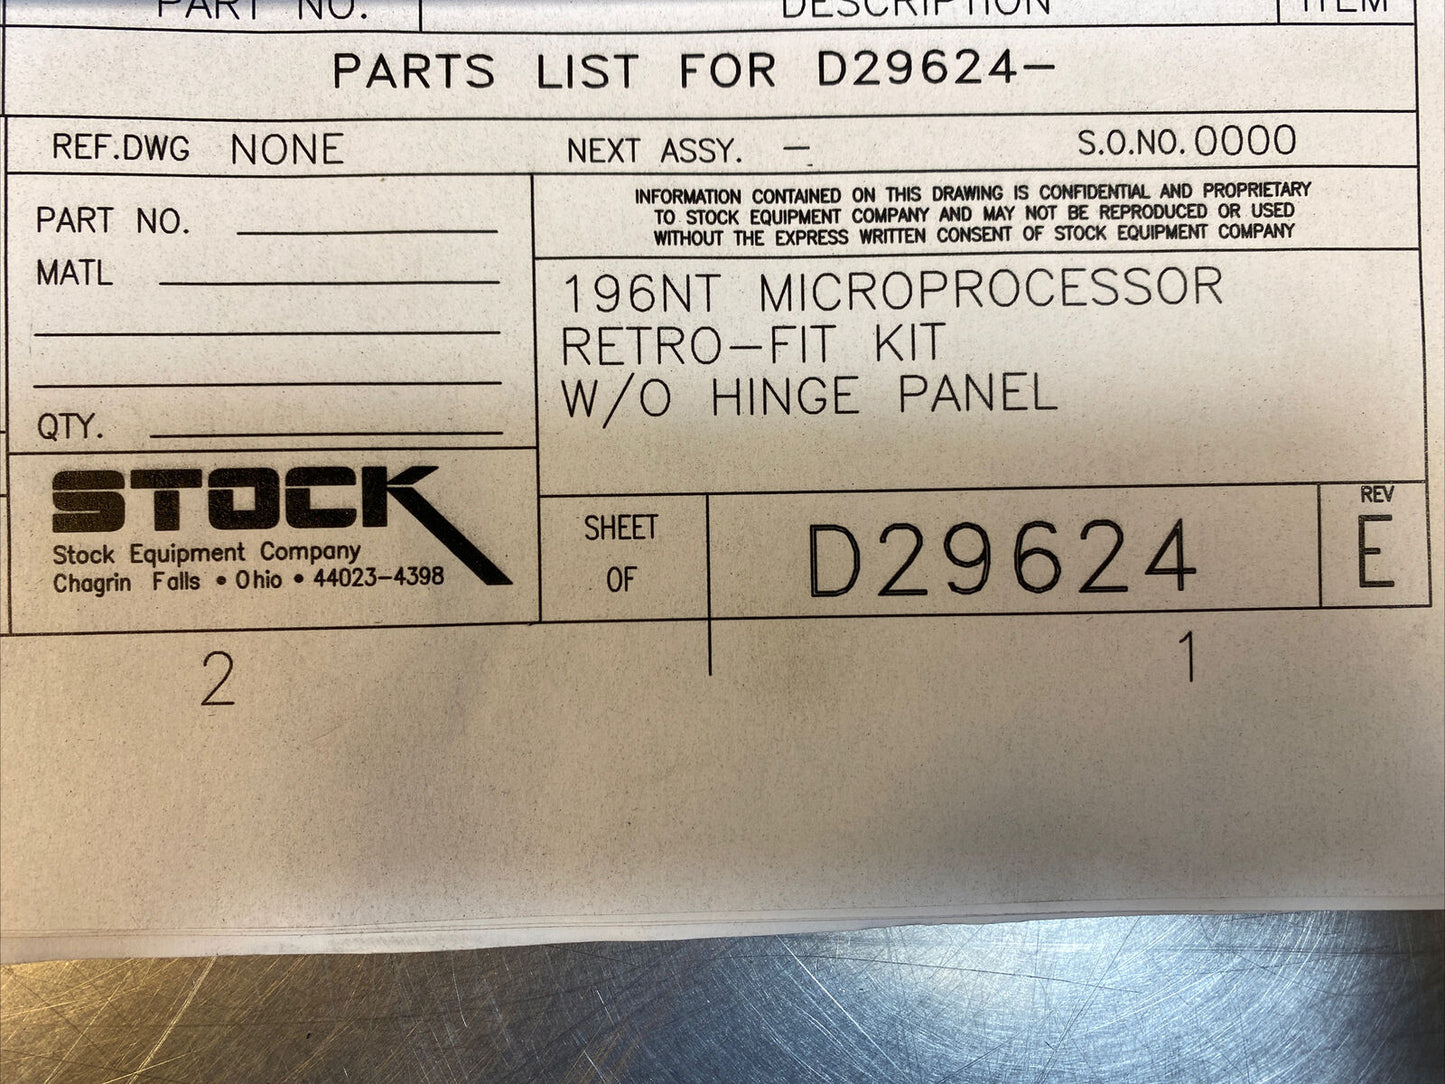 Stock 196NT MICROPROCESSOR RETRO-FIT KIT D29624 REV E  Control Board Display Panel  2B